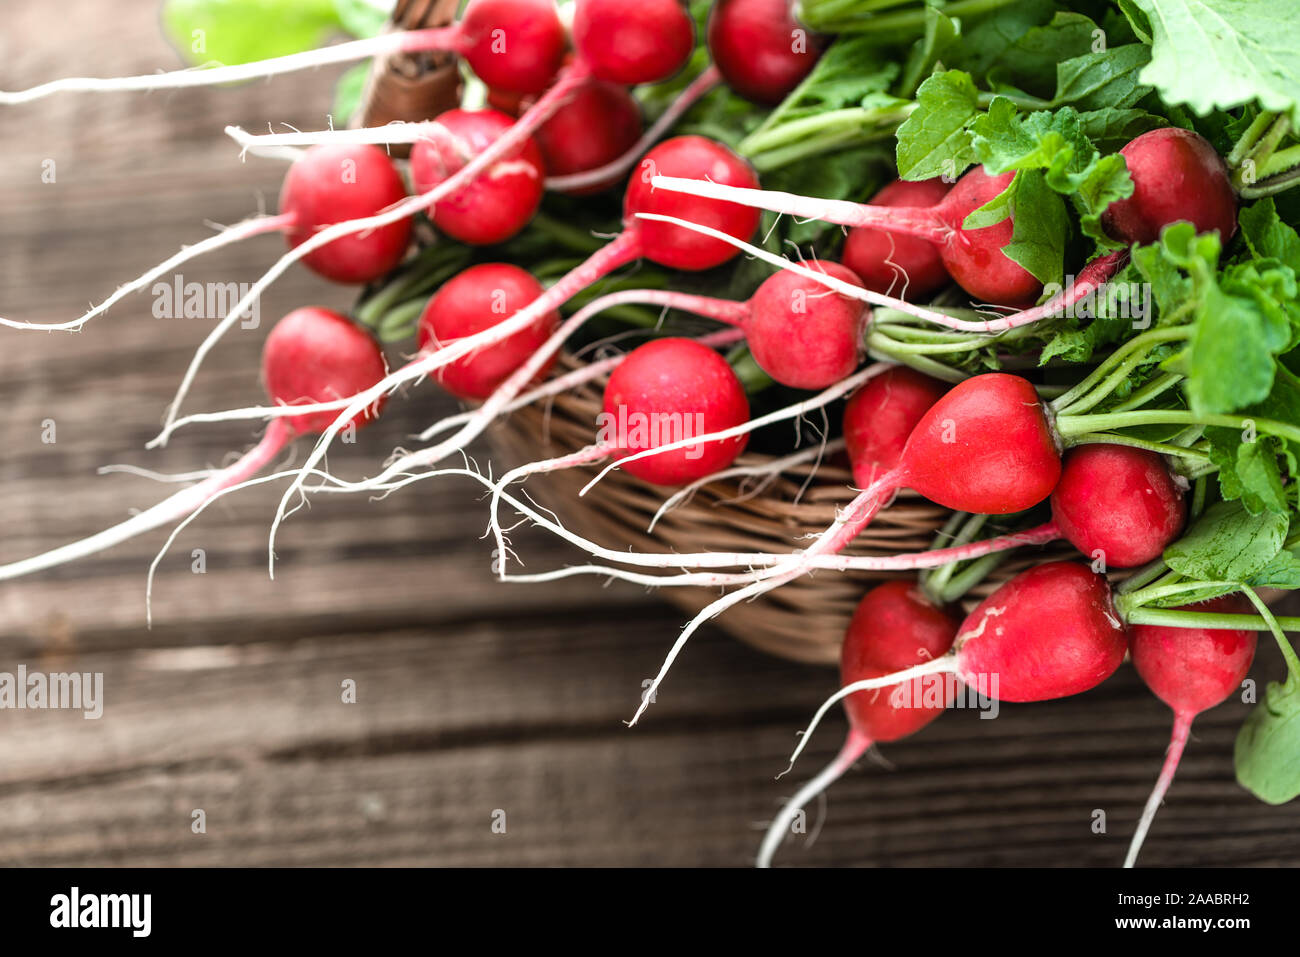 https://c8.alamy.com/comp/2AABRH2/farm-fresh-vegetables-organic-freshly-harvested-radishes-red-bunch-of-radish-on-farmer-market-2AABRH2.jpg